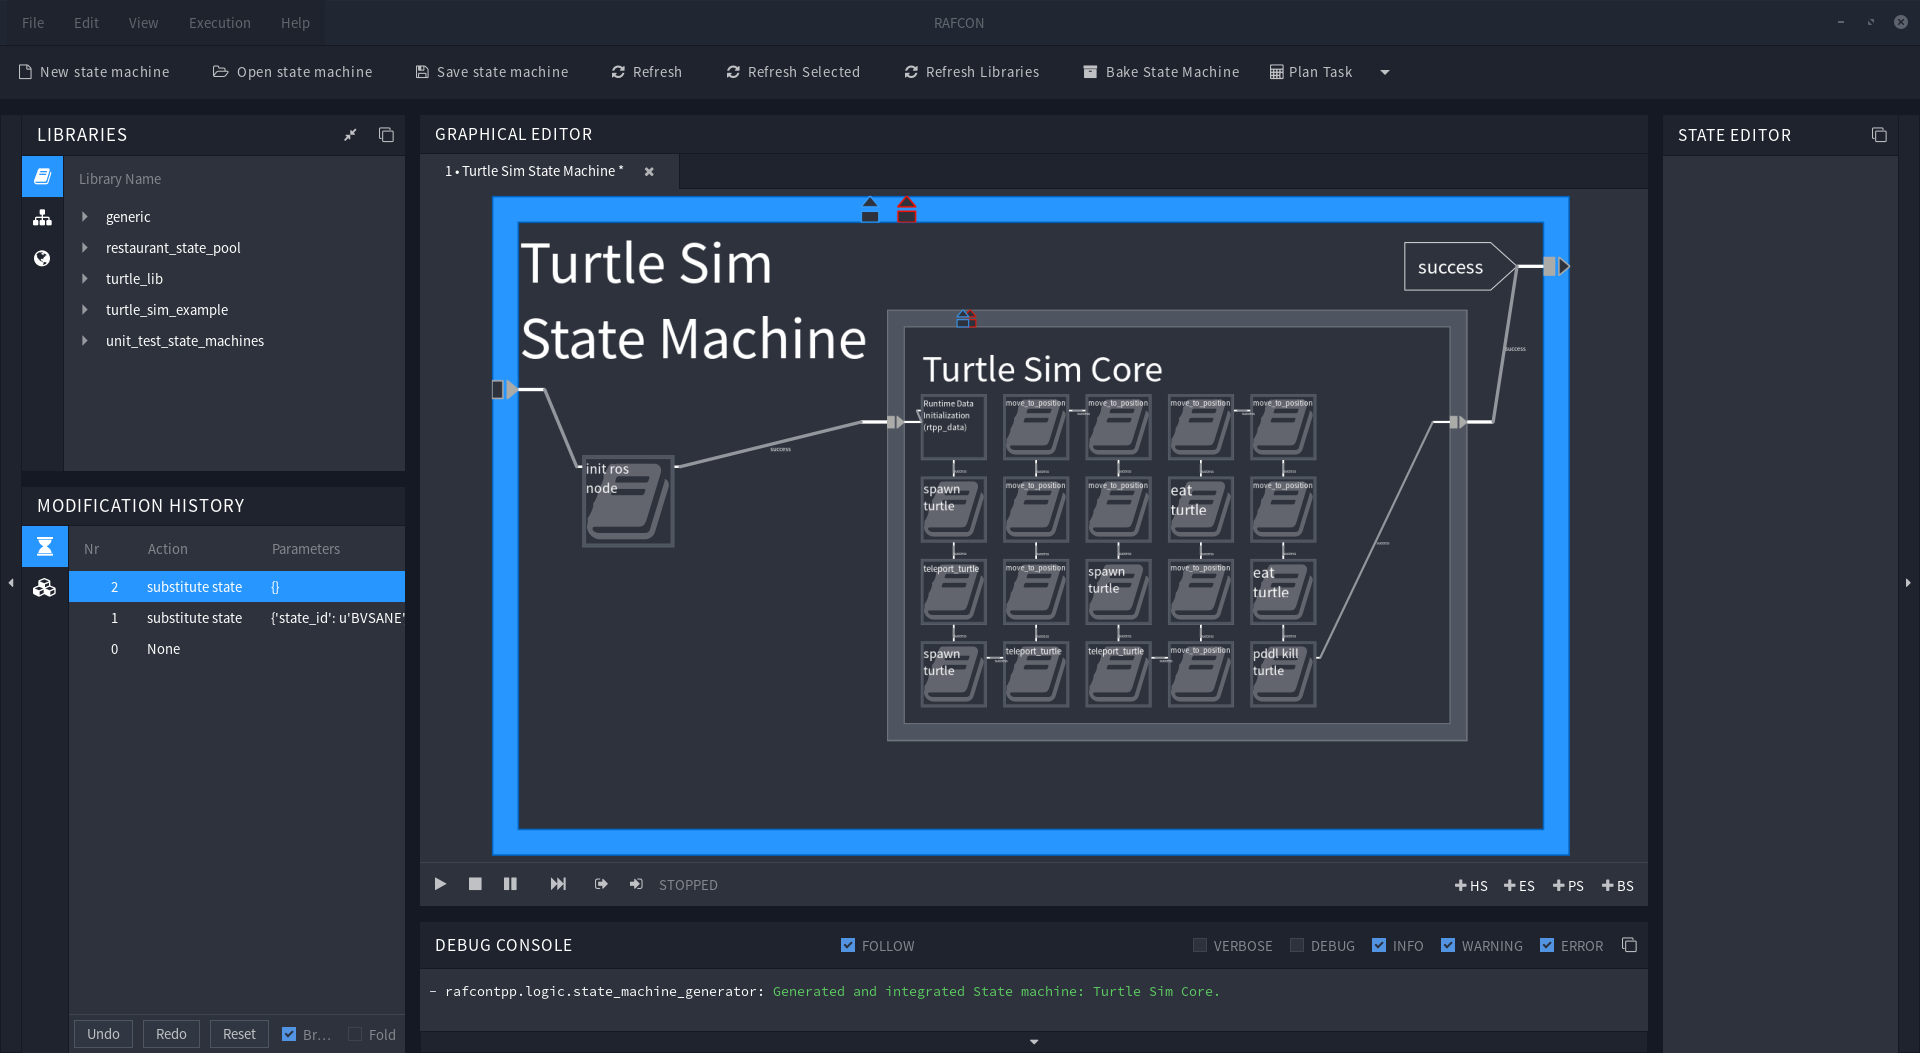 The turtle sim state machine